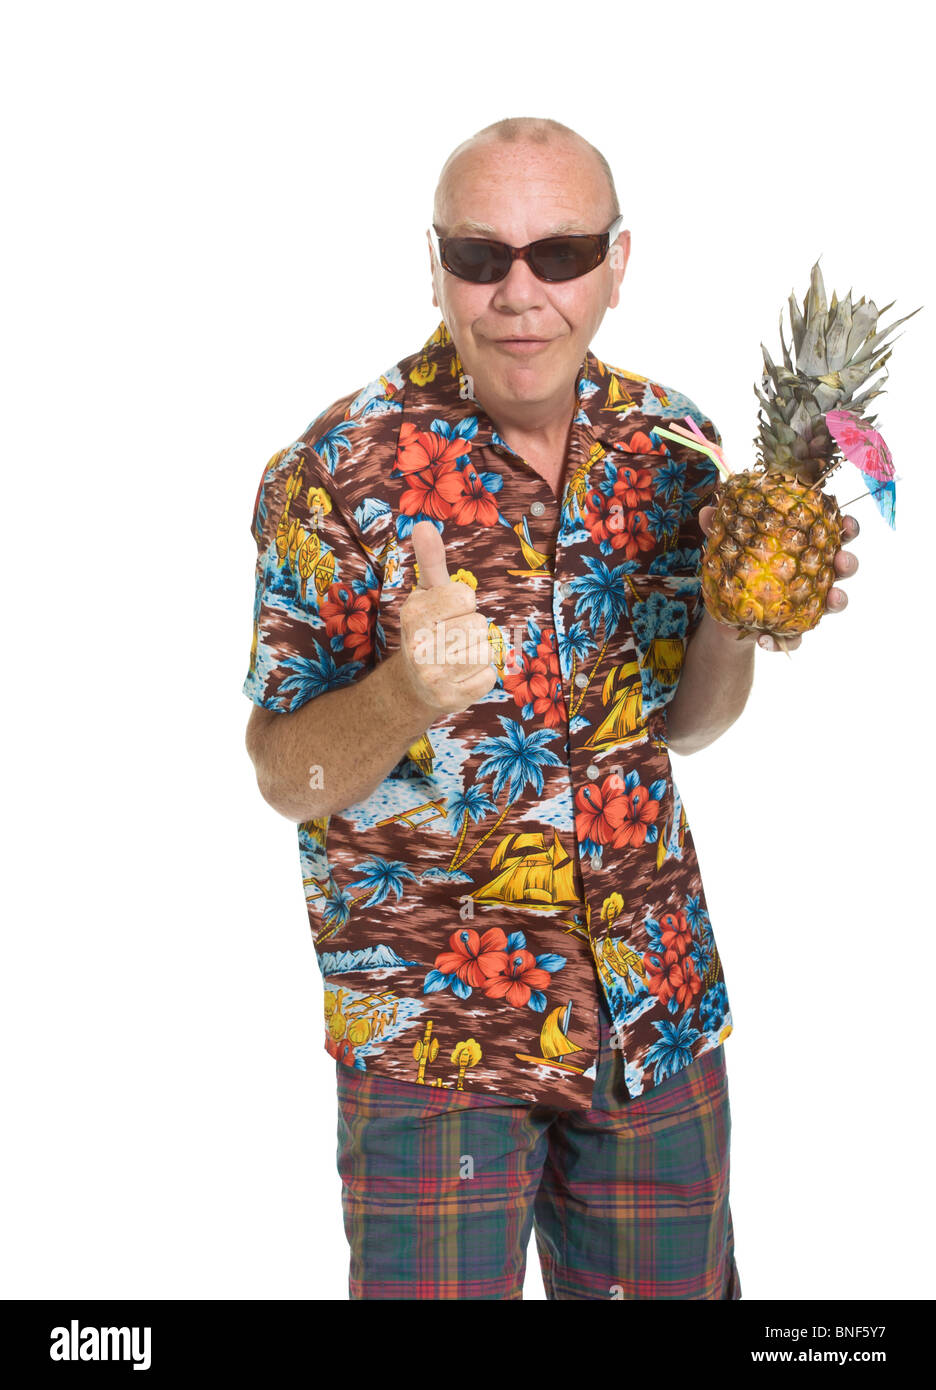 Hawaiian shirt man hi-res stock photography and images - Page 19 - Alamy